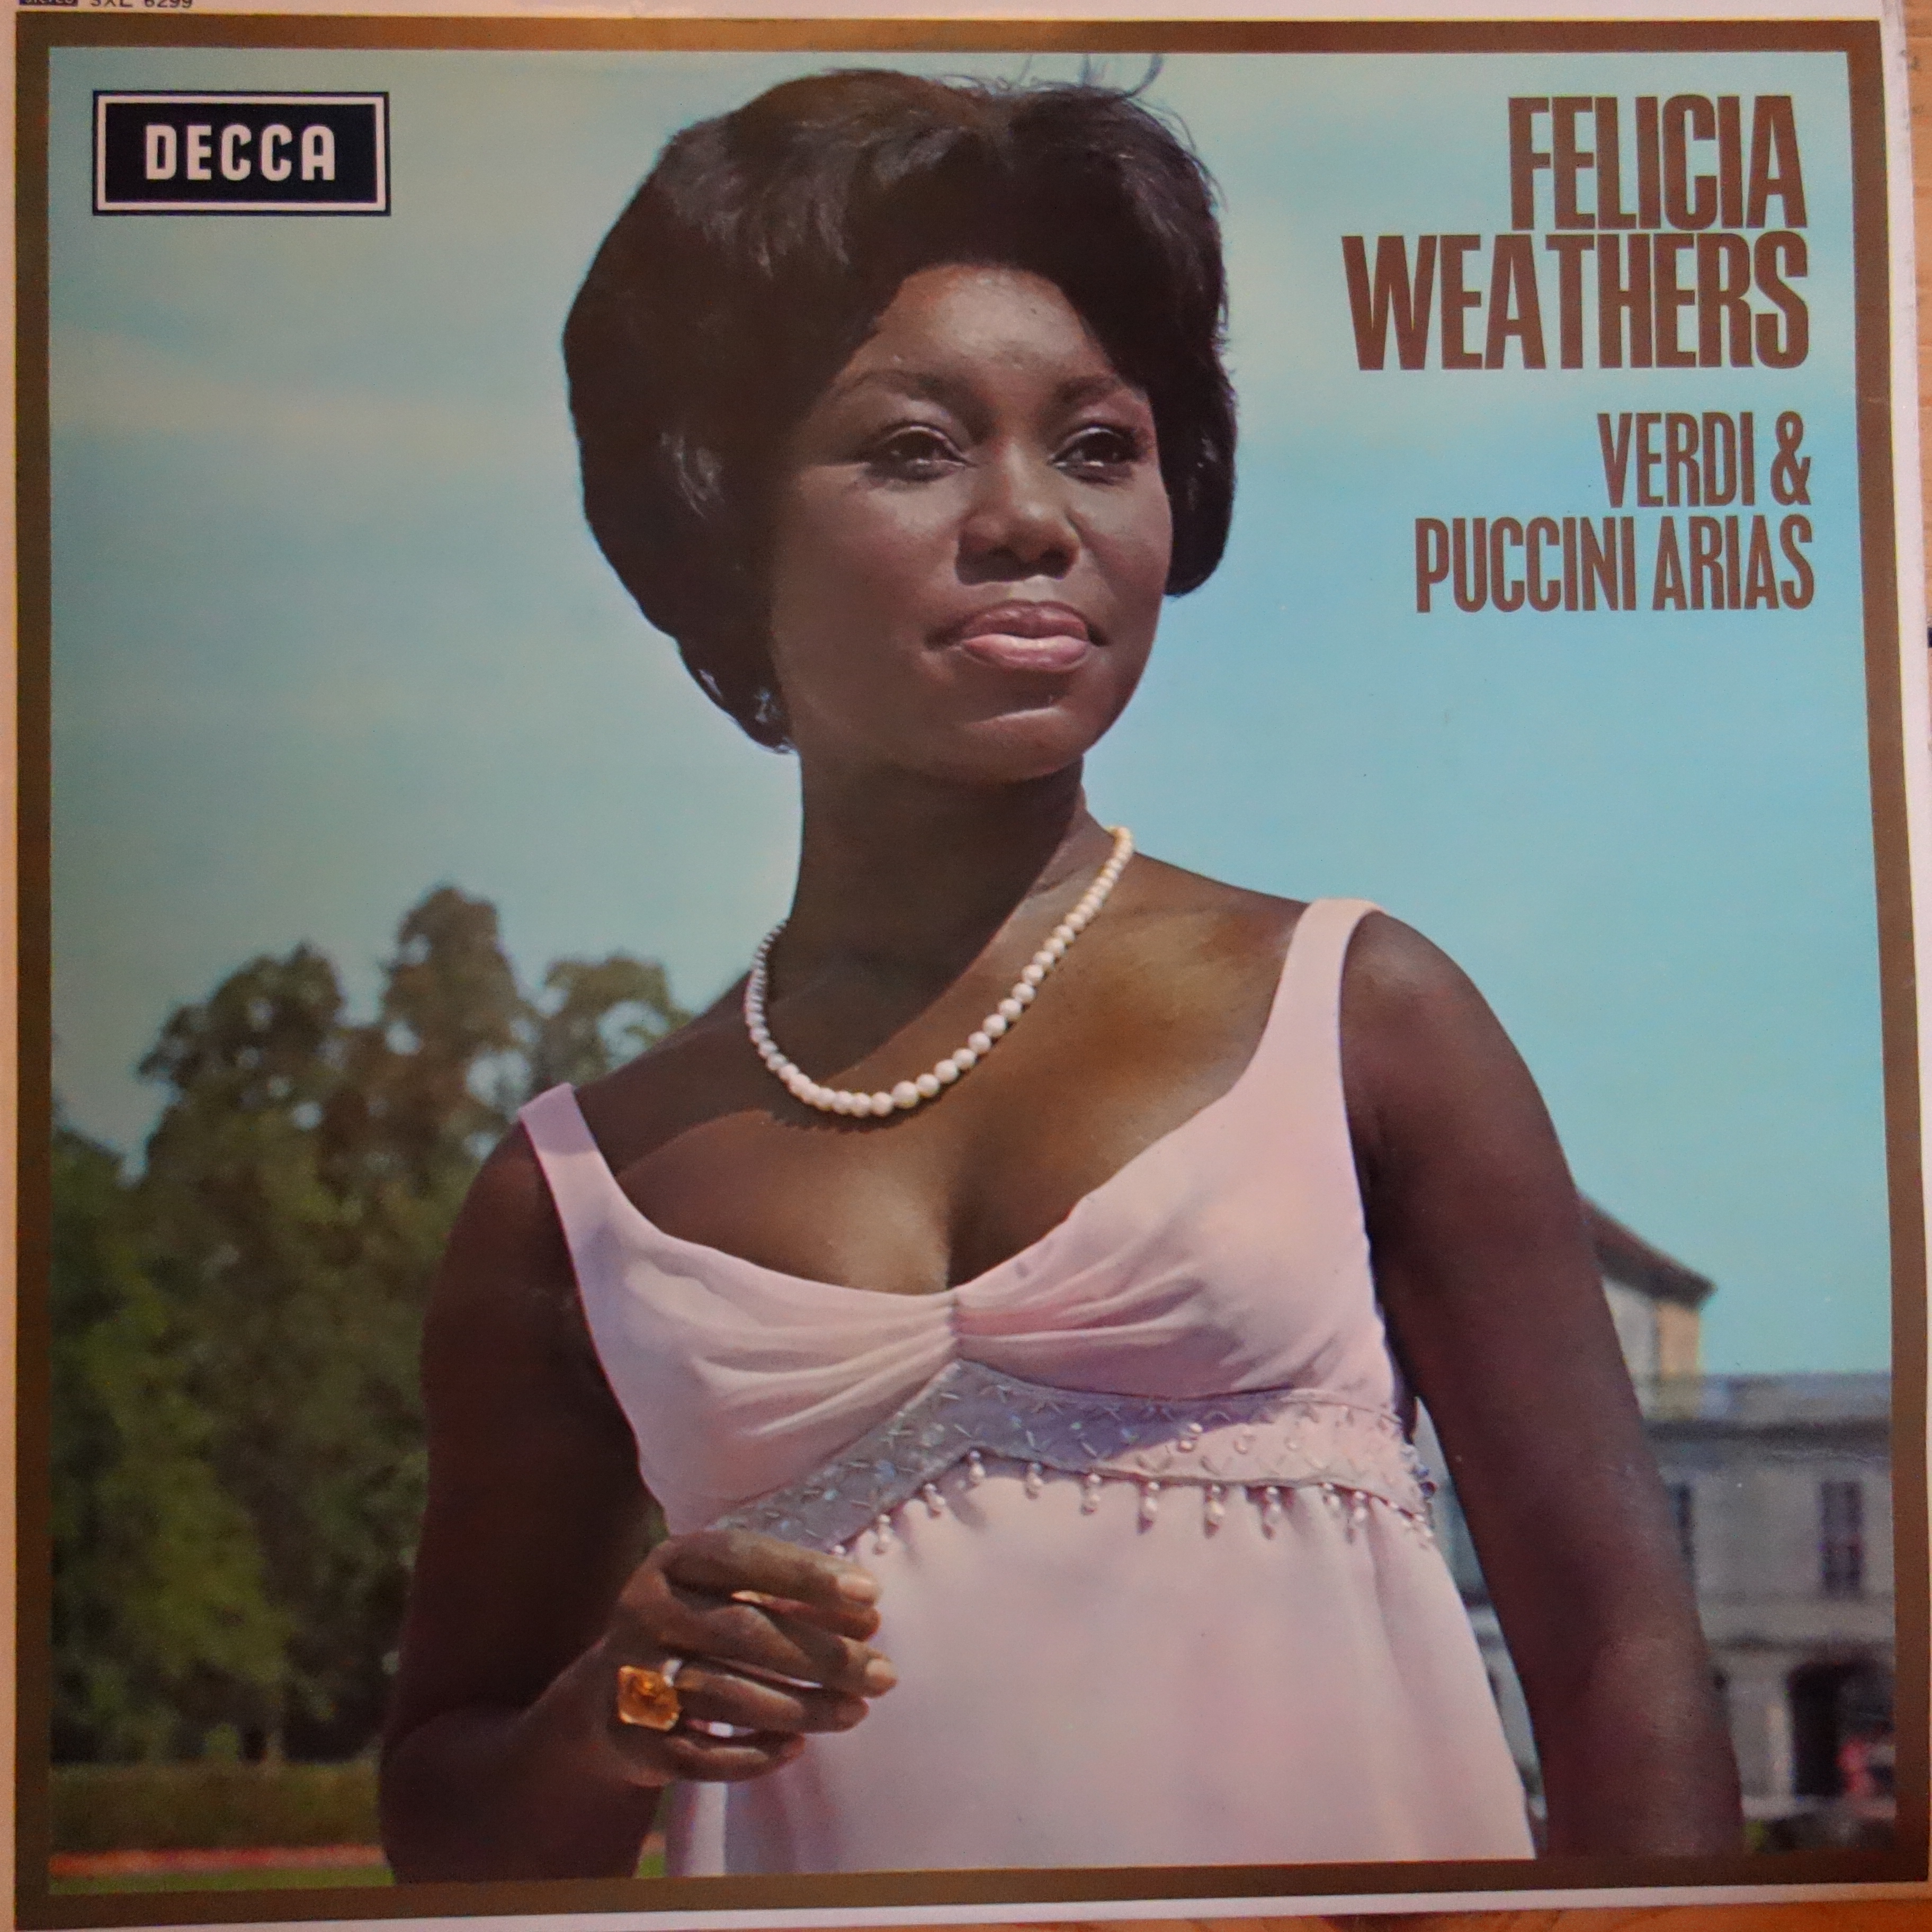 SXL 6299 Verdi & Puccini Arias / Felicia Weathers